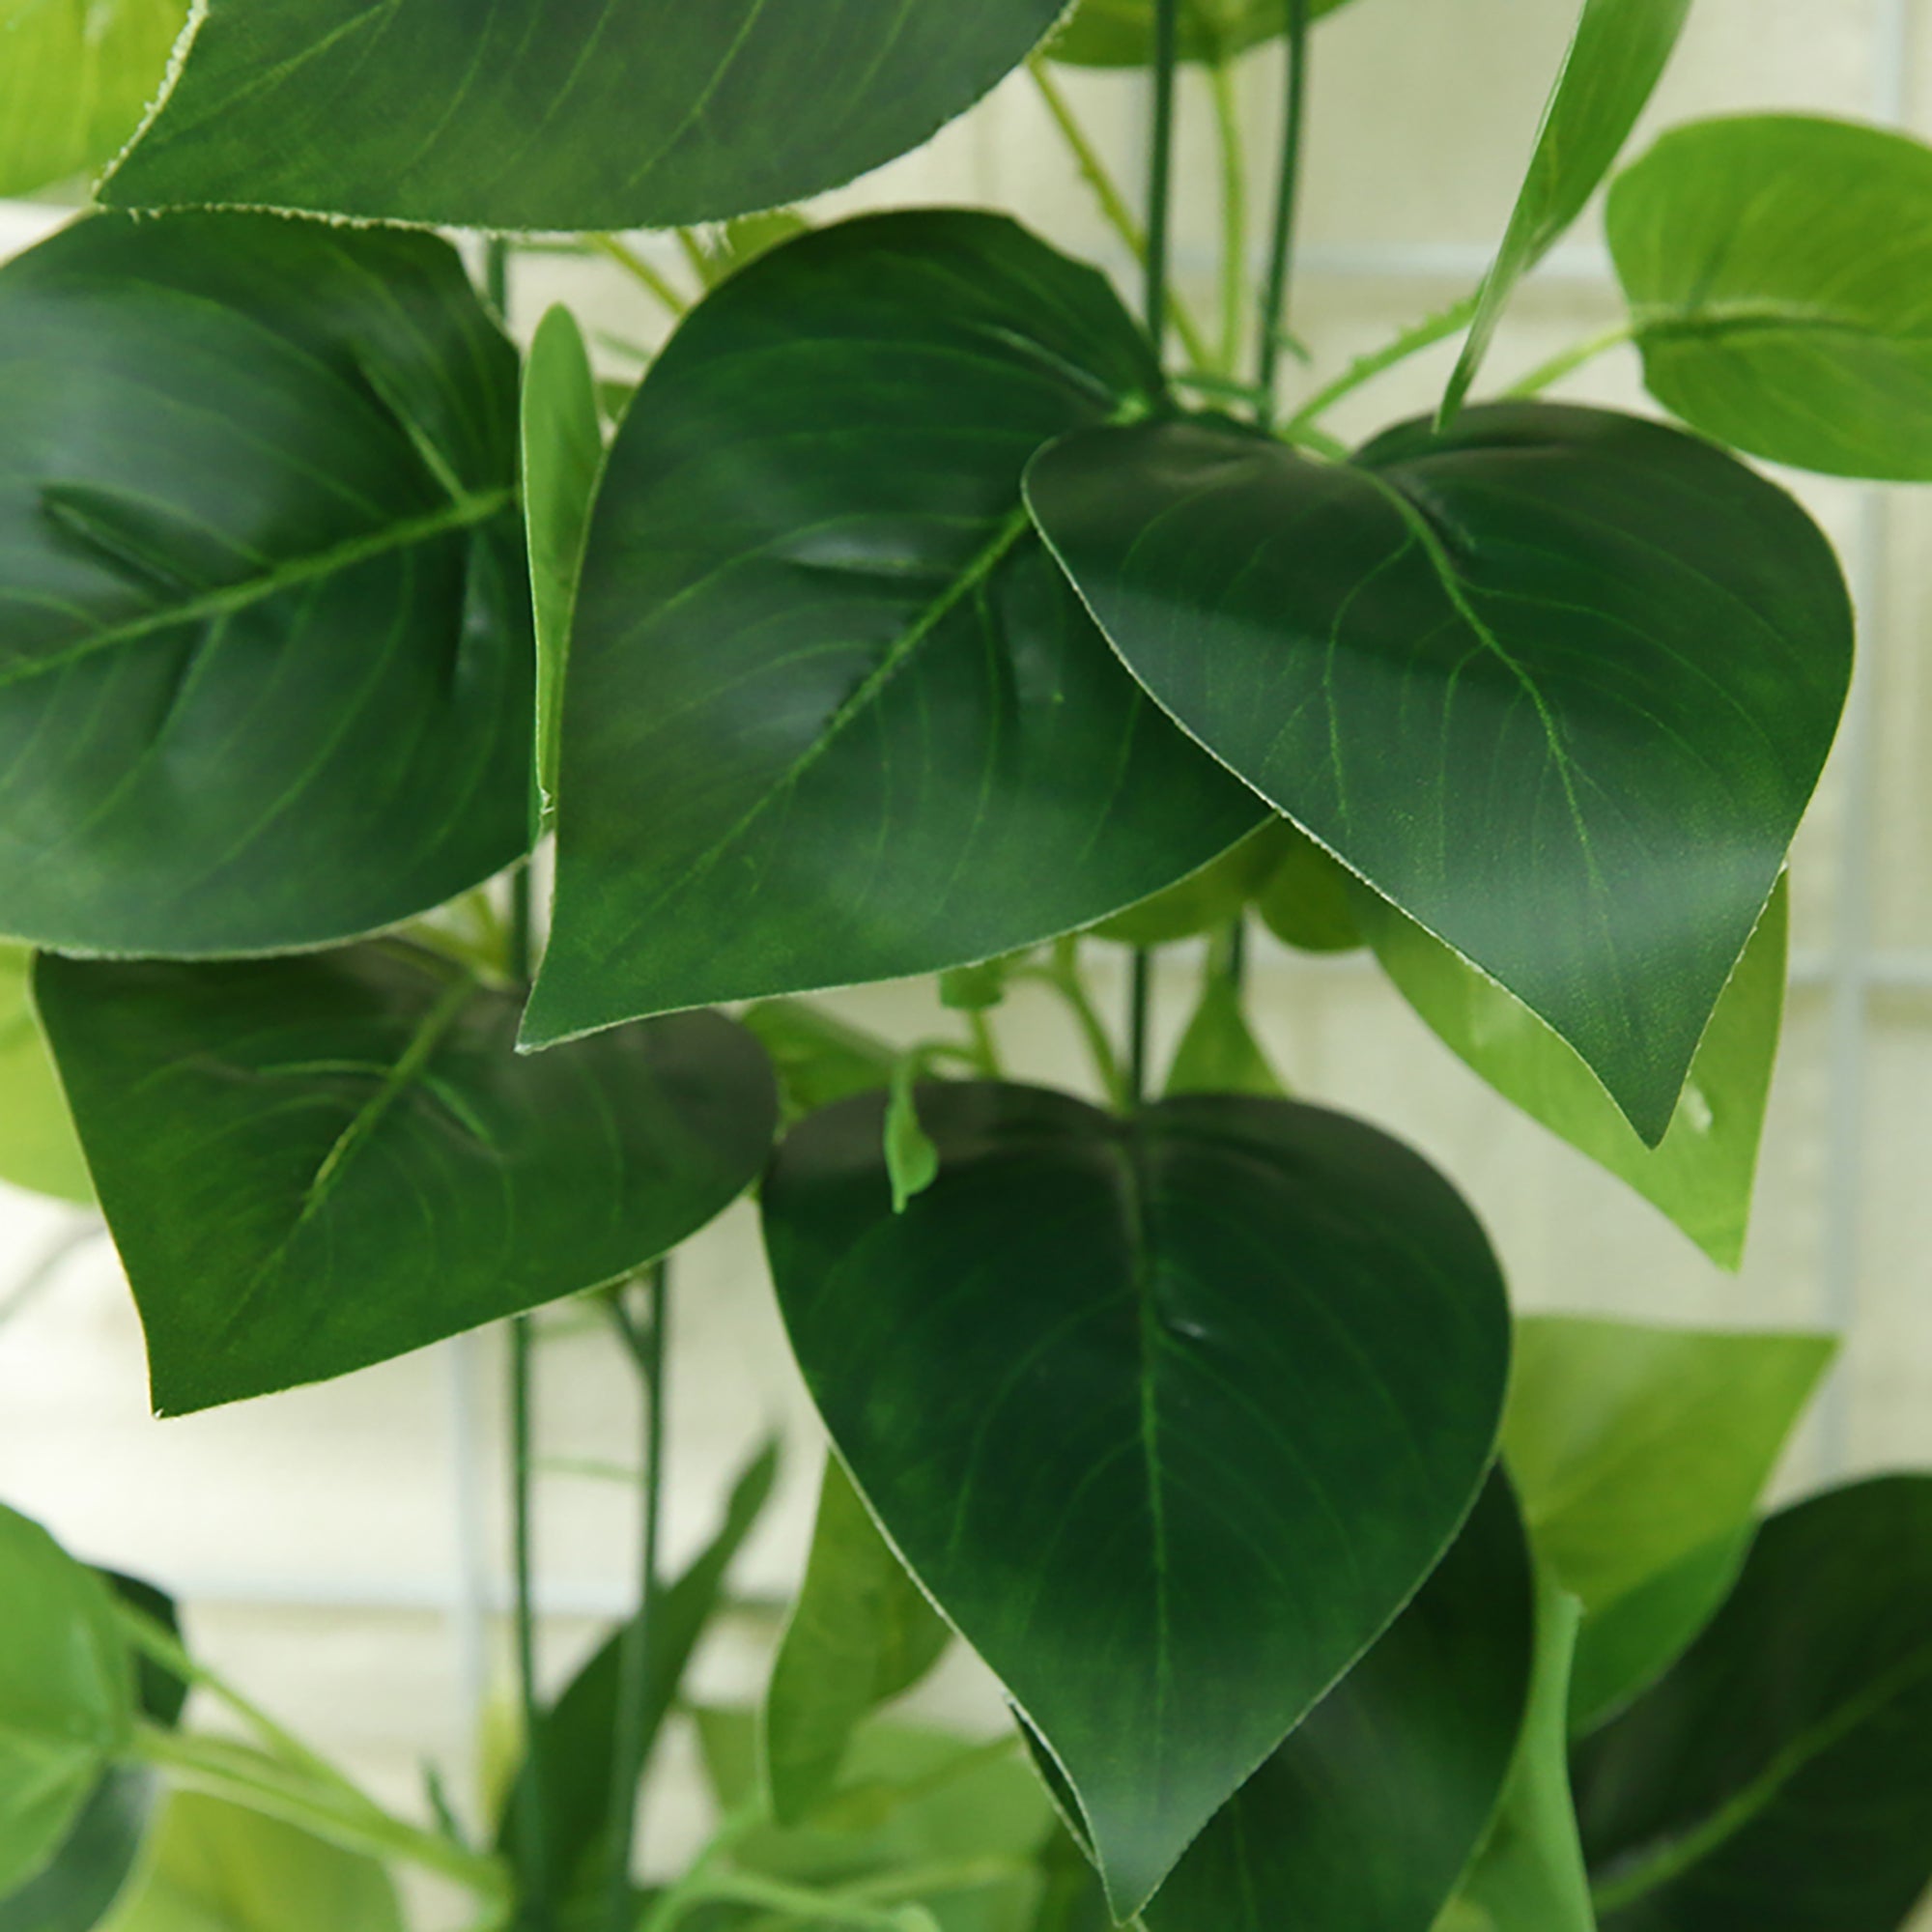 Artificial Hanging Plants Leaf Garland 100"